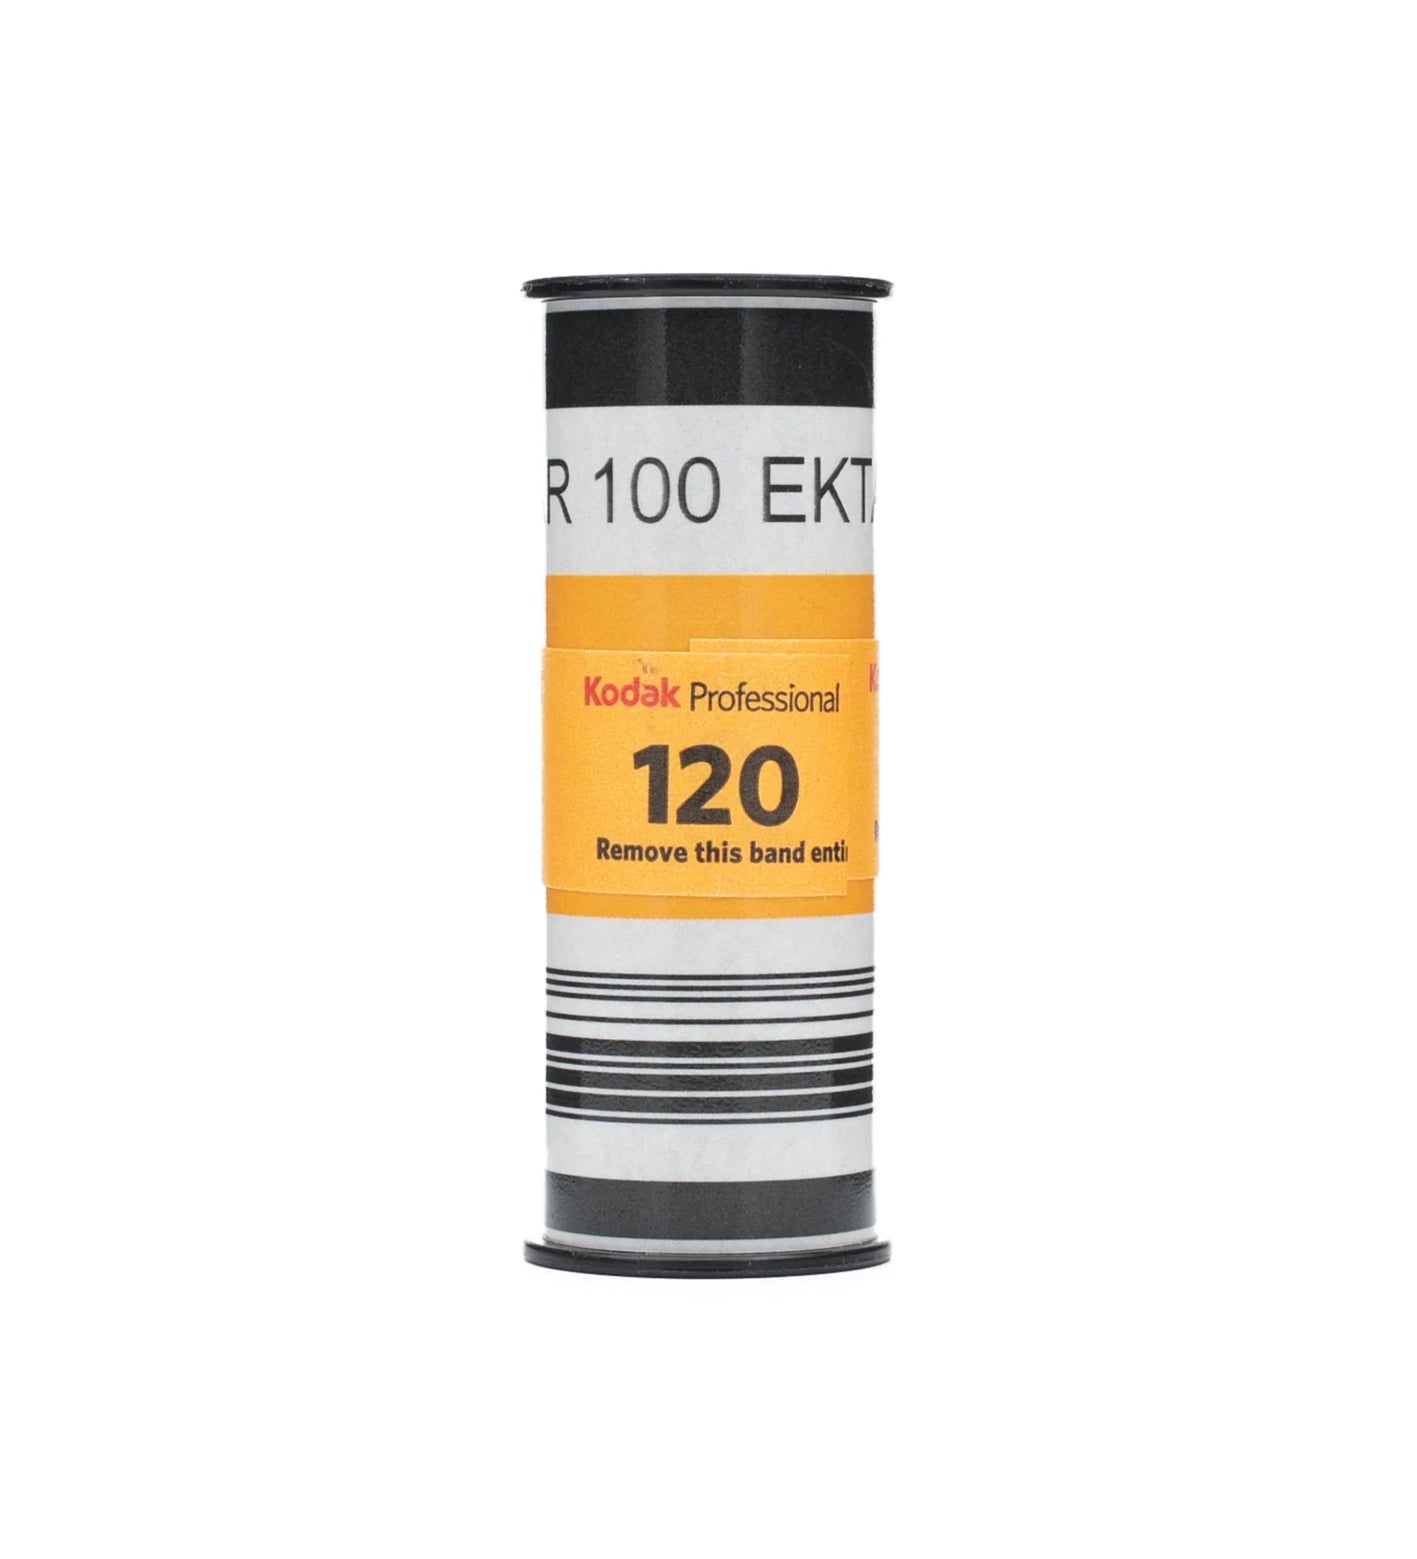 Kodak Ektar 100 120 Film (£16.99 incl VAT)